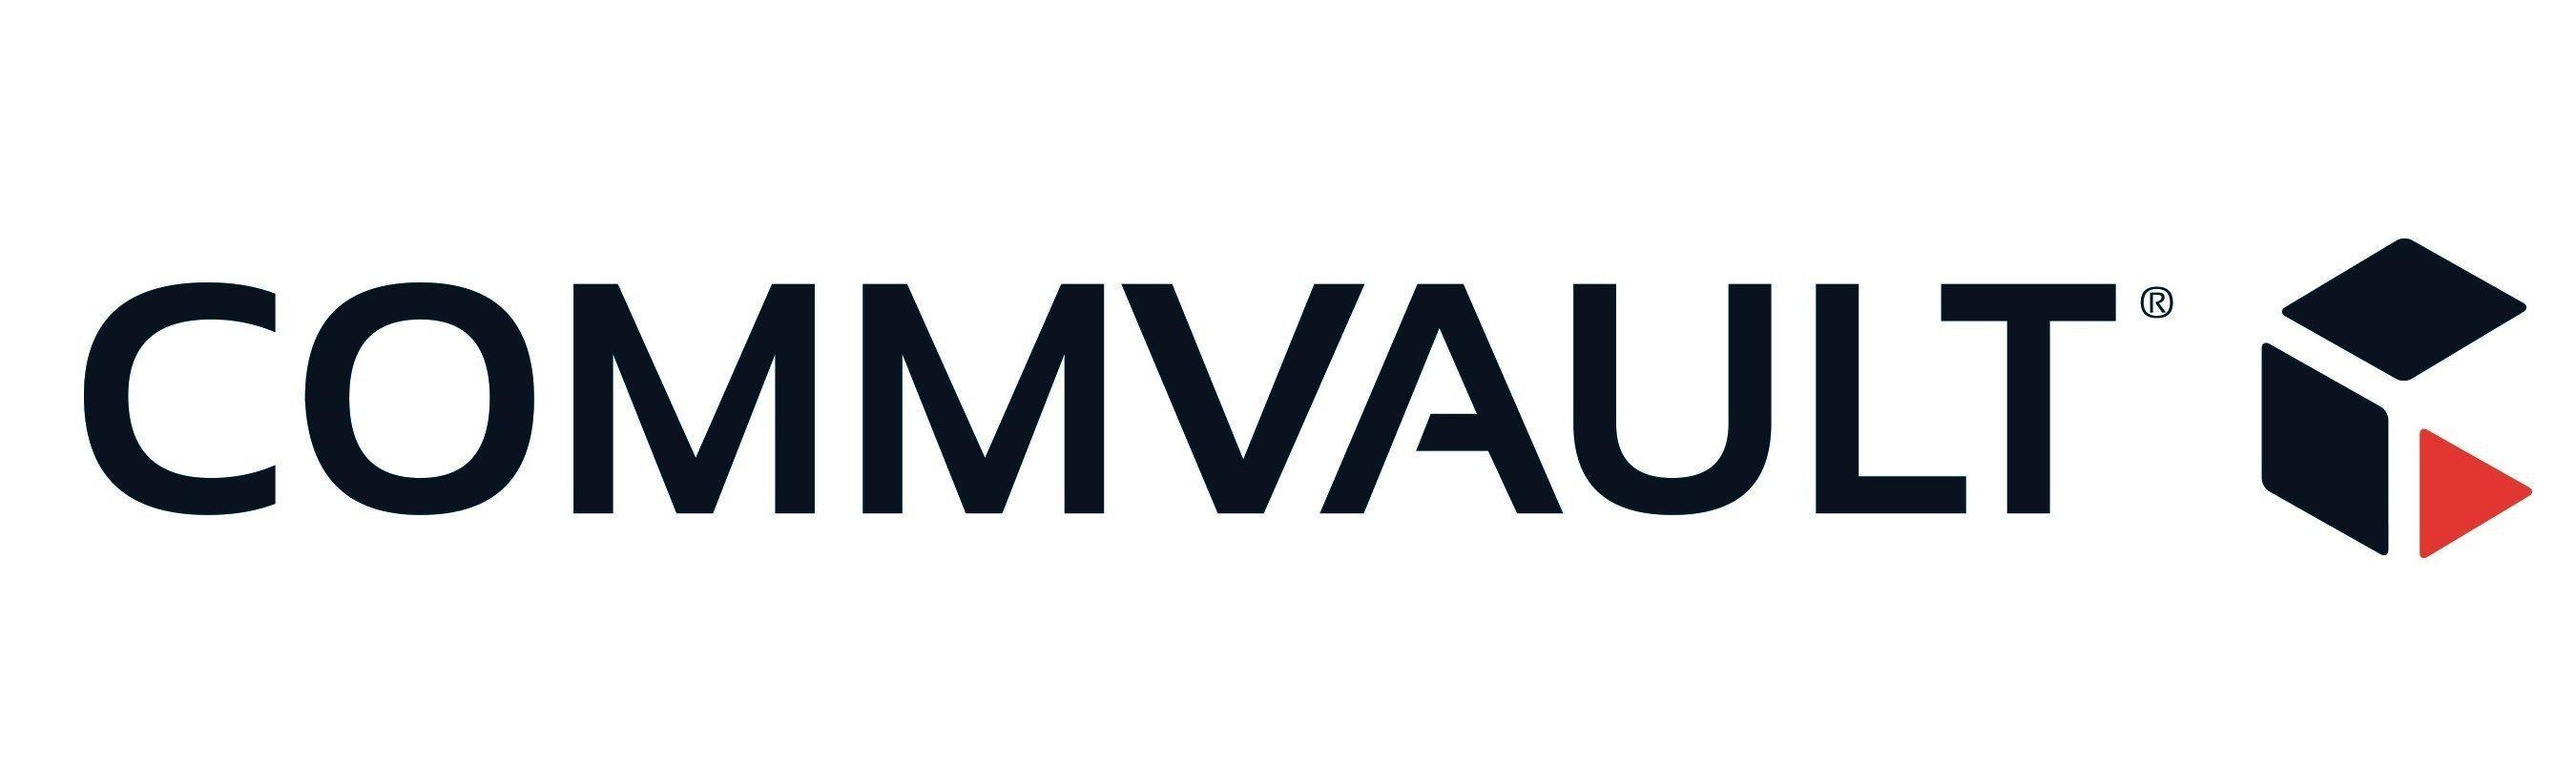 CommVault Logo - Commvault new Logo - SINC | Strategic Information Networking Conferences